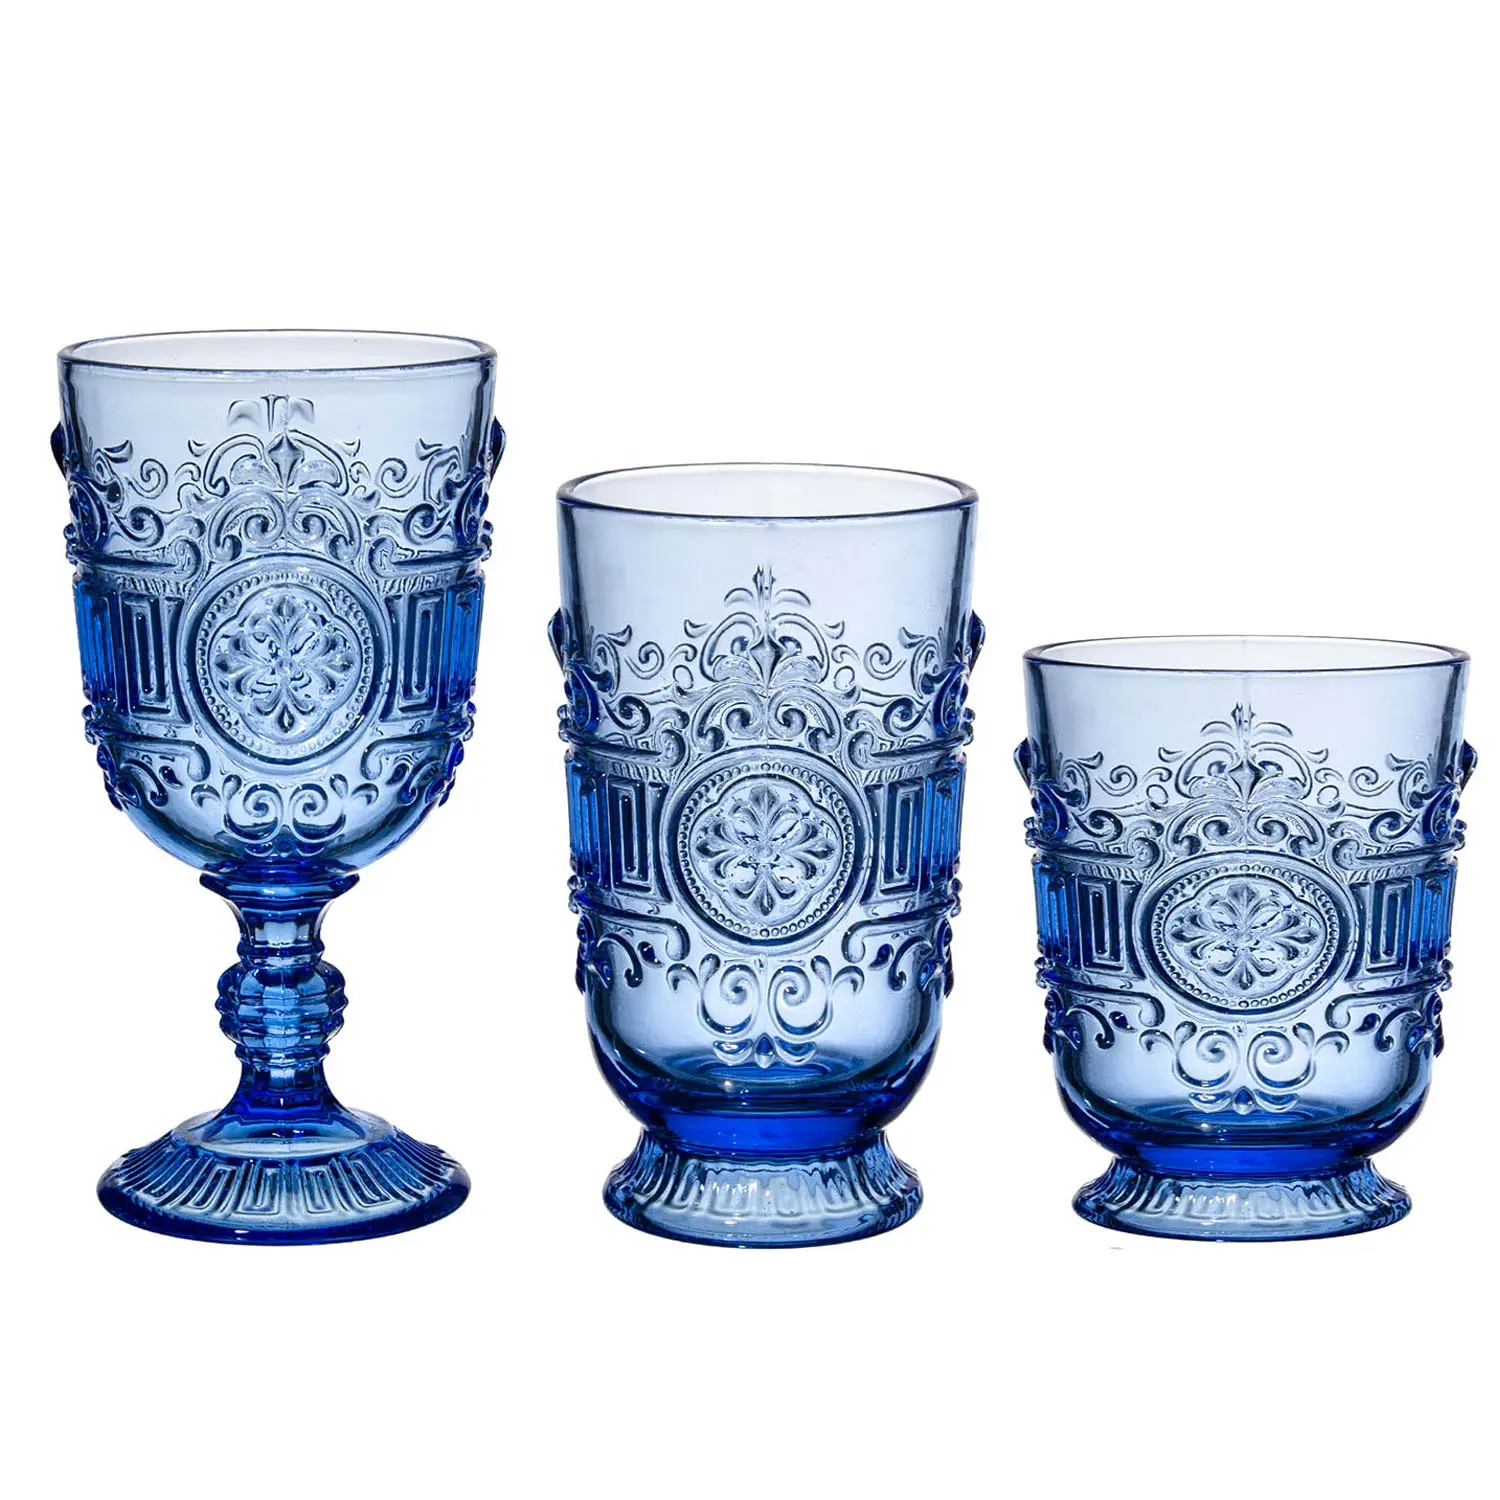 customize Drinking Glassware Wedding Vintage Embossed wine glass blue Colored Wine Goblet Glasses set